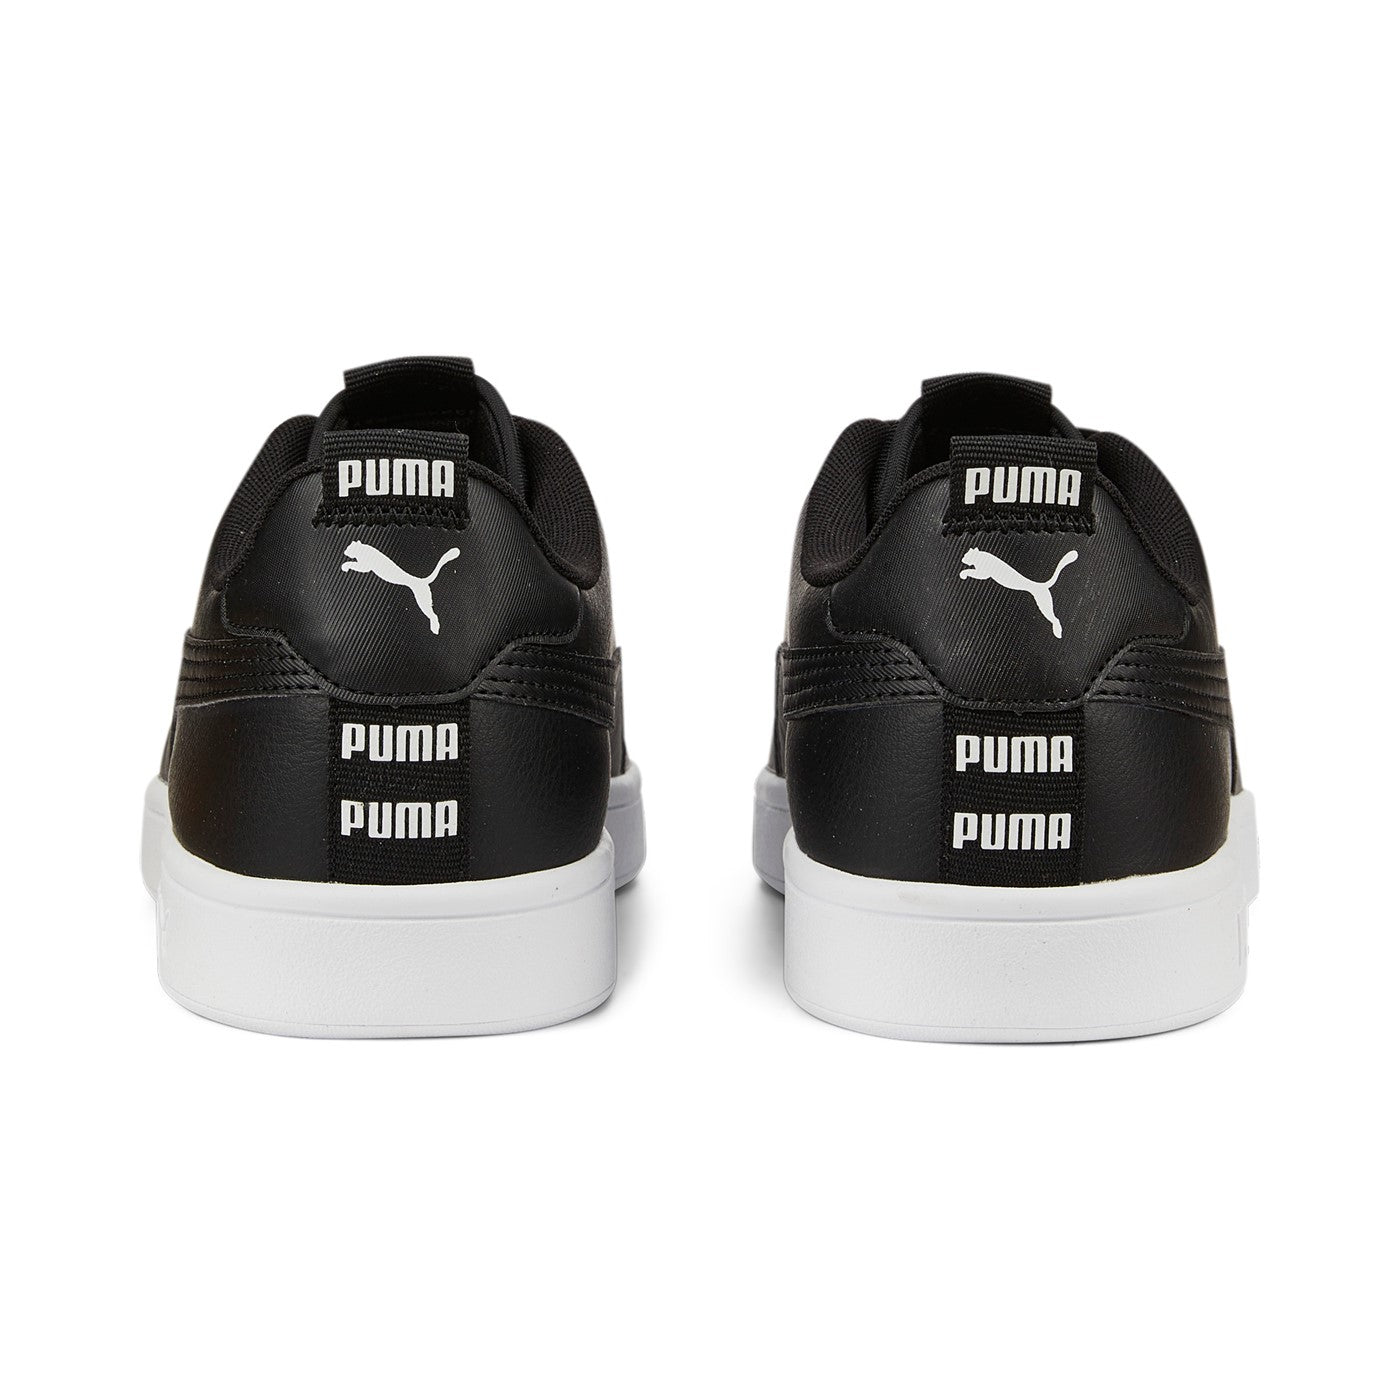 Puma scarpa sneaker da adulti Smash v2 Tape 386397 02 nero